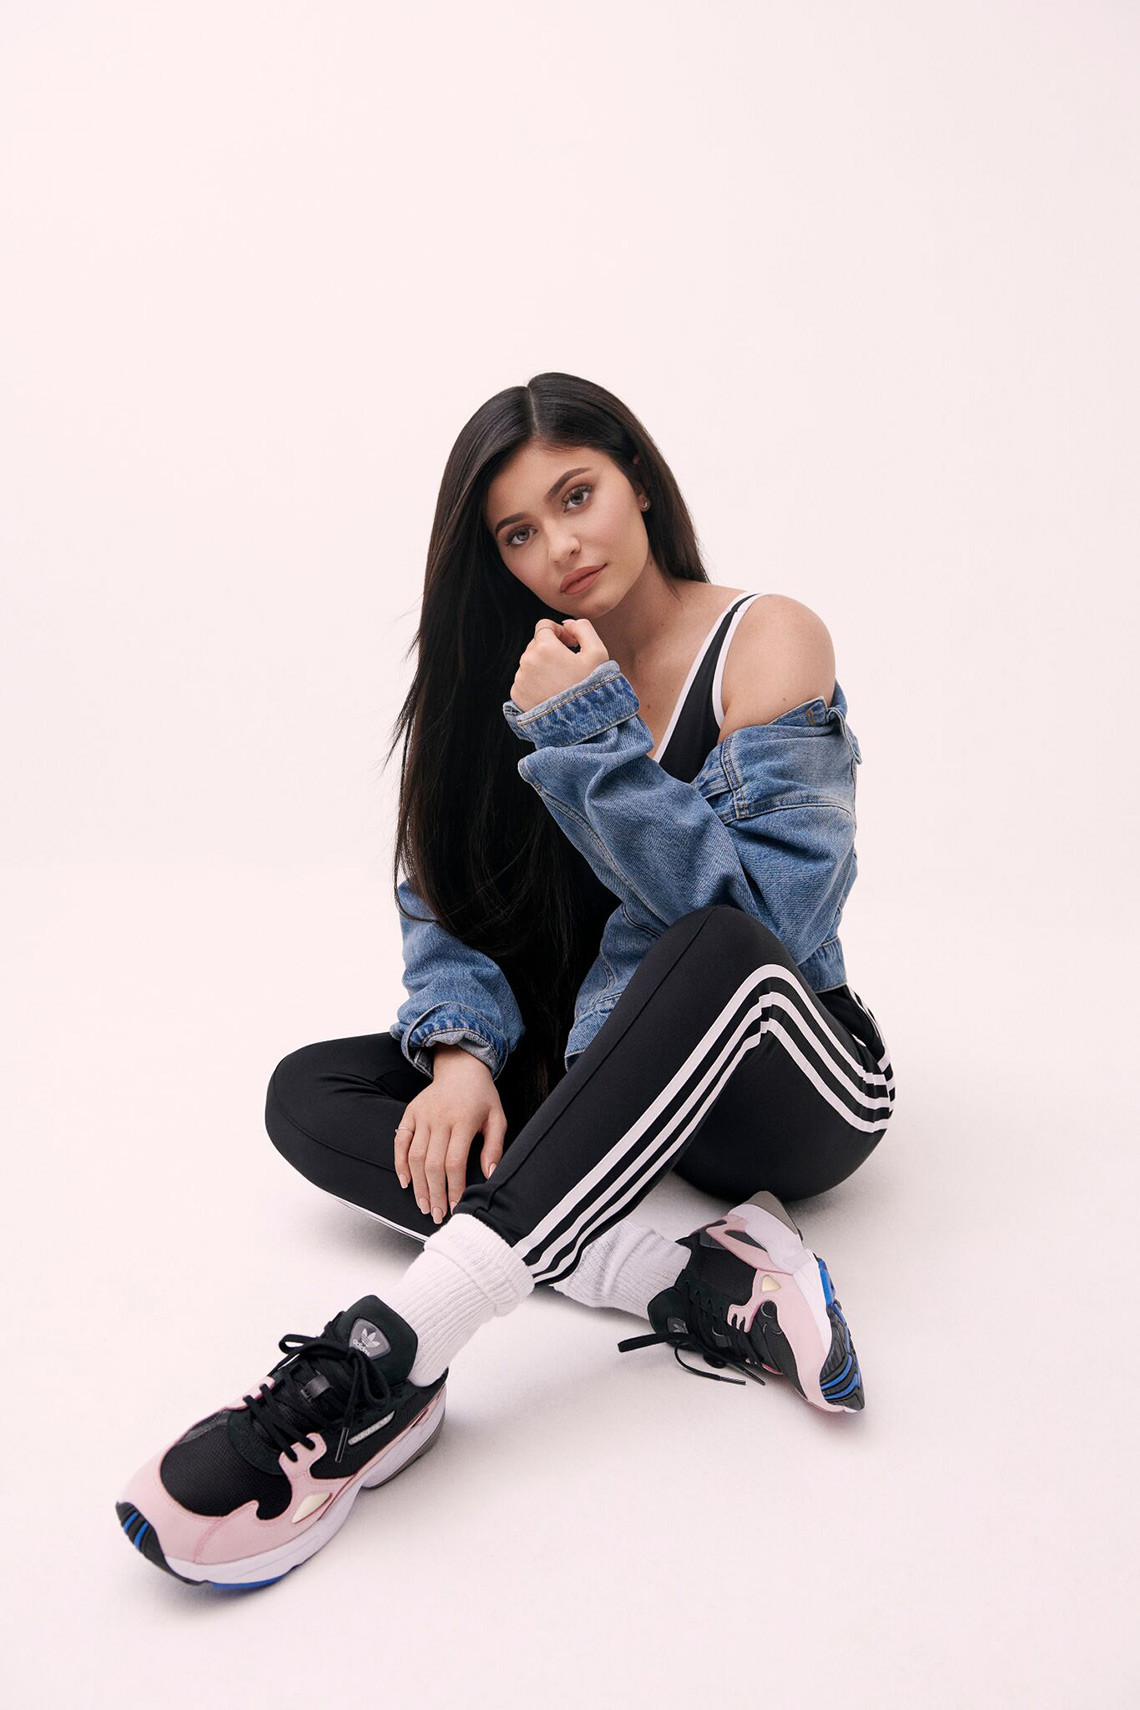 Kylie Jenner As Adidas' Latest Brand 